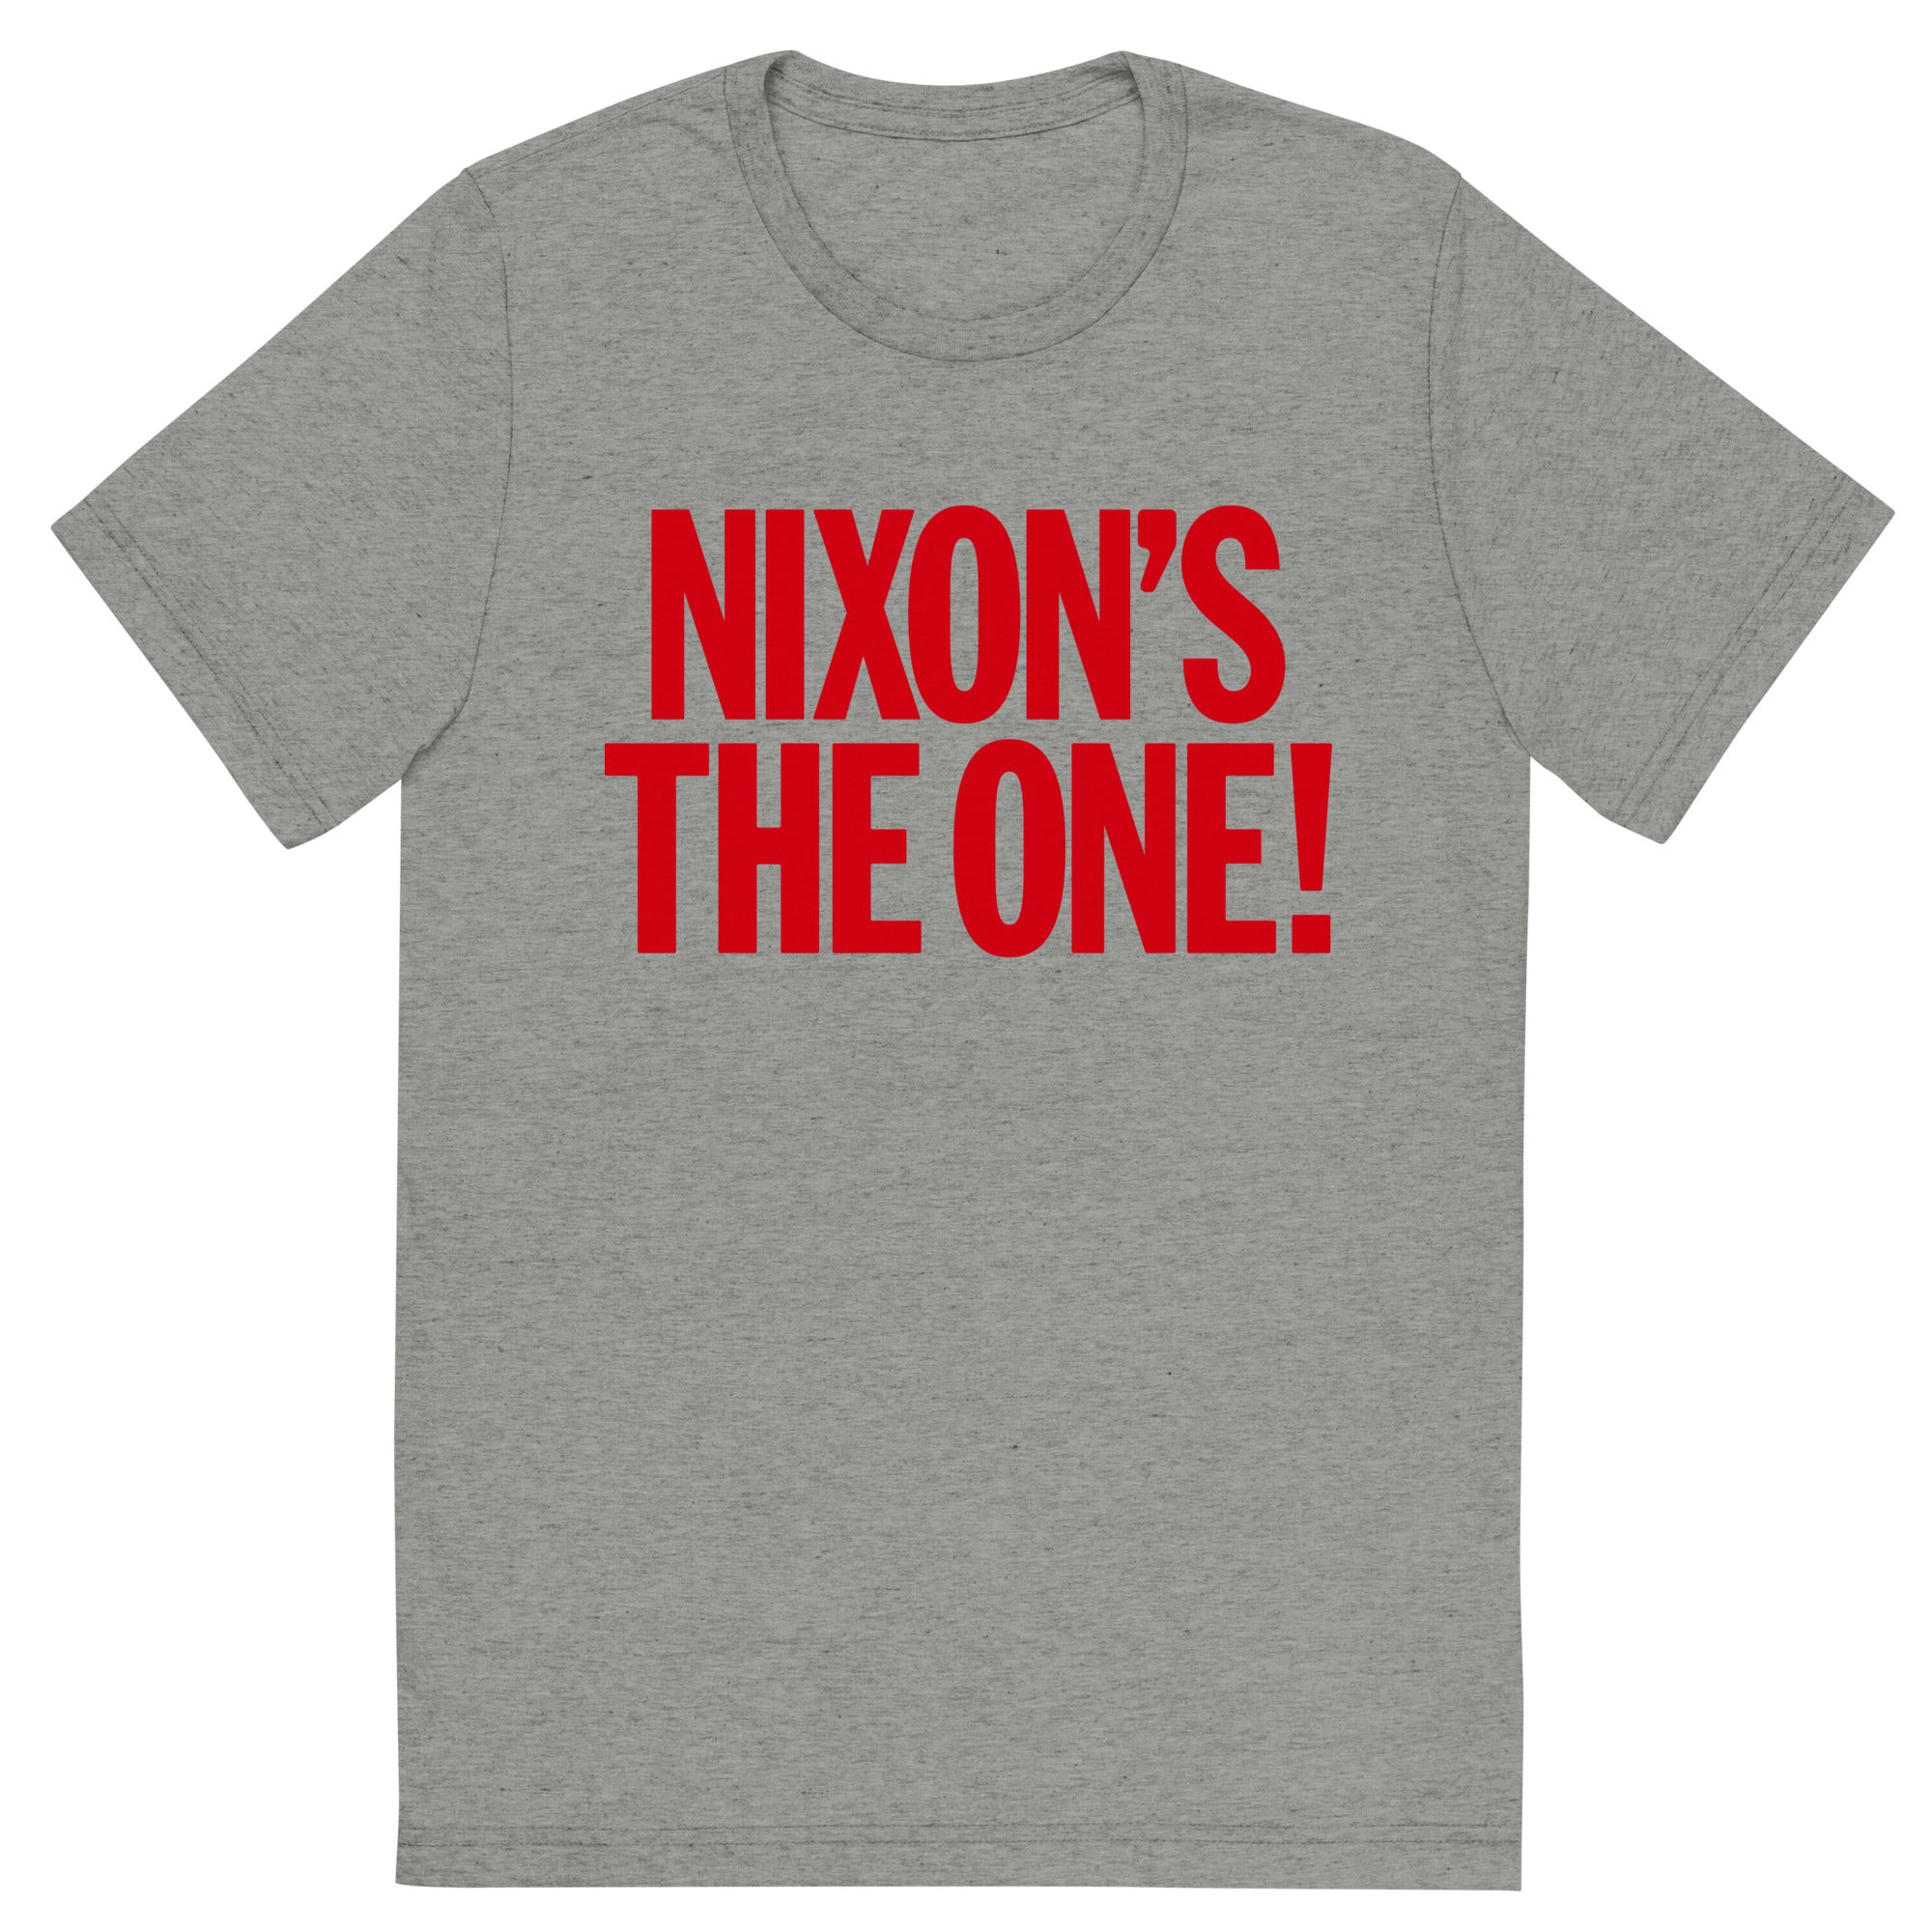 Nixon's the One 1968 Campaign Tri-Blend T-Shirt